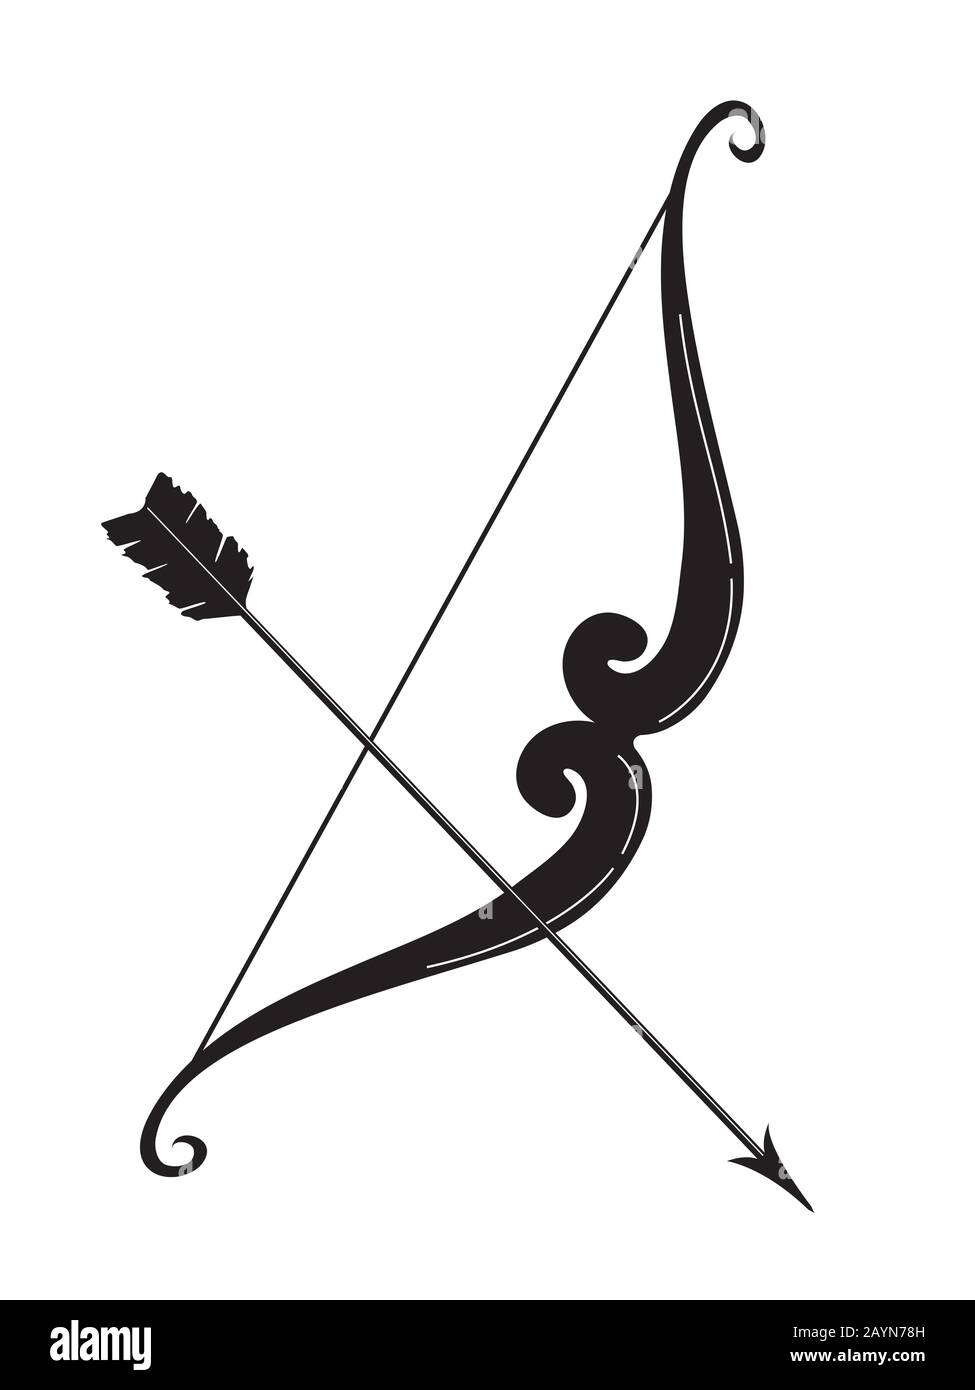 bow and arrow illustration Stock Vector